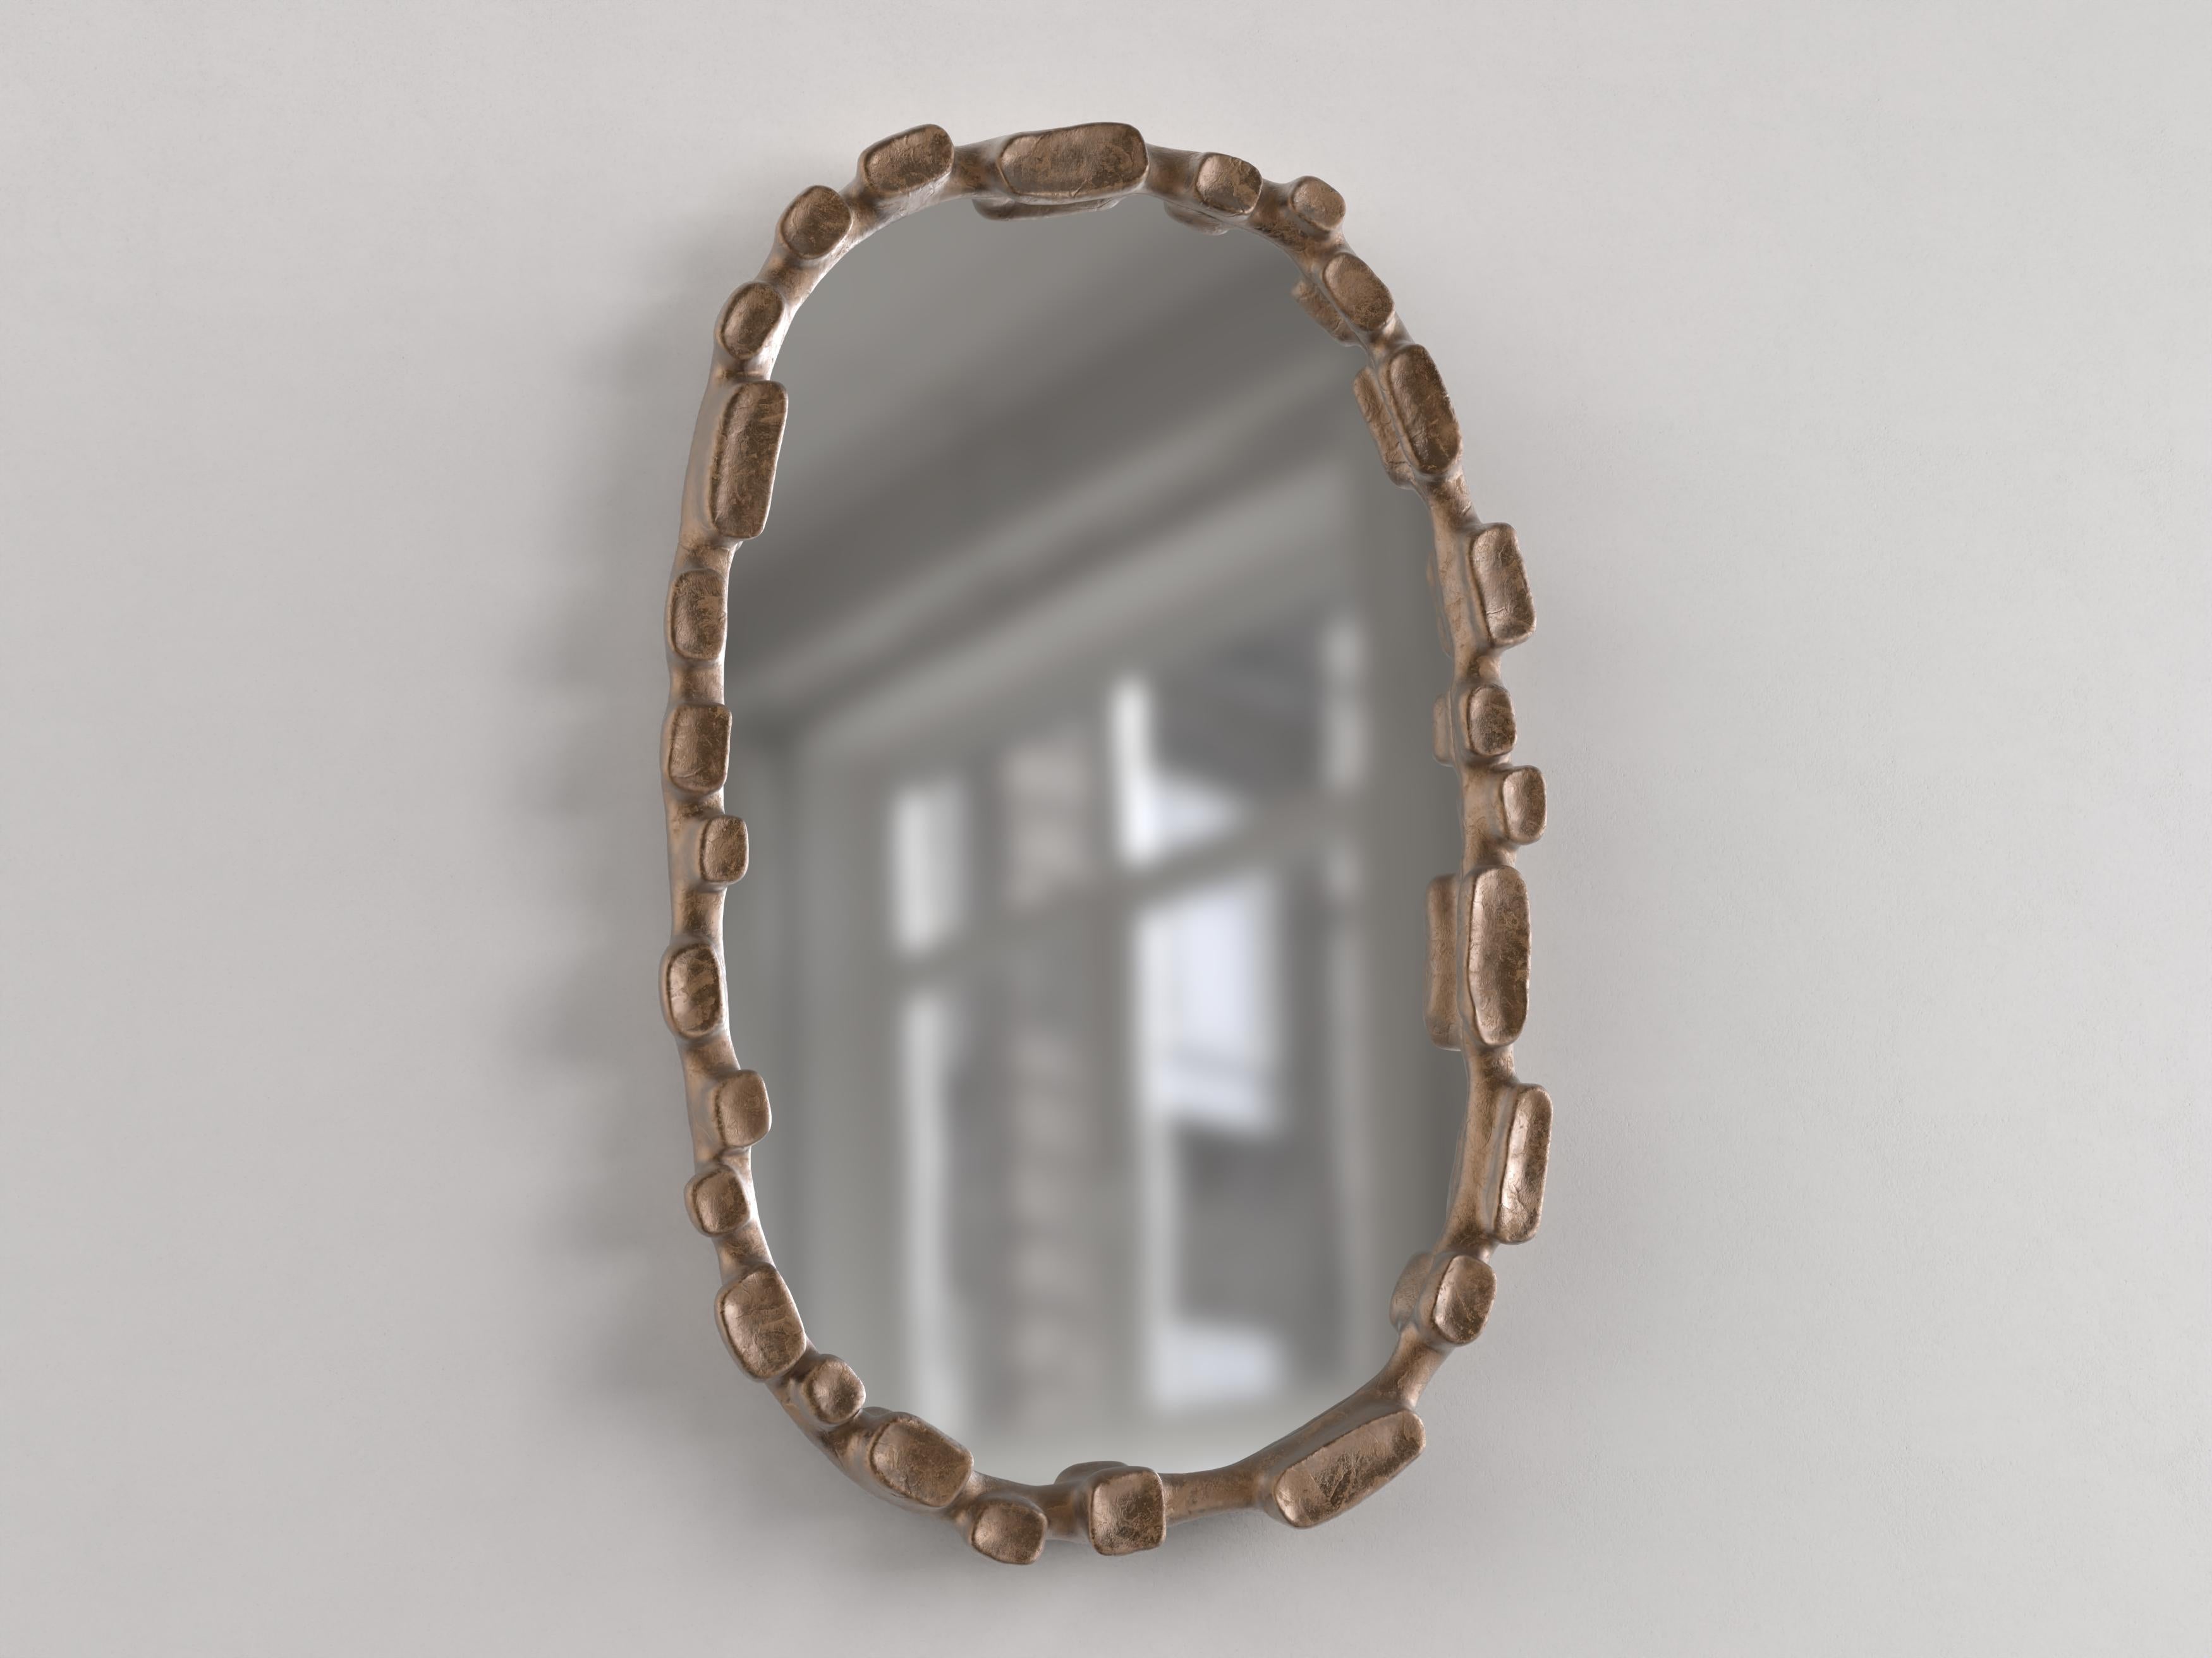 Cast Contemporary Limited Edition Bronze Mirror, Mare V2 by Simone Fanciullacci For Sale